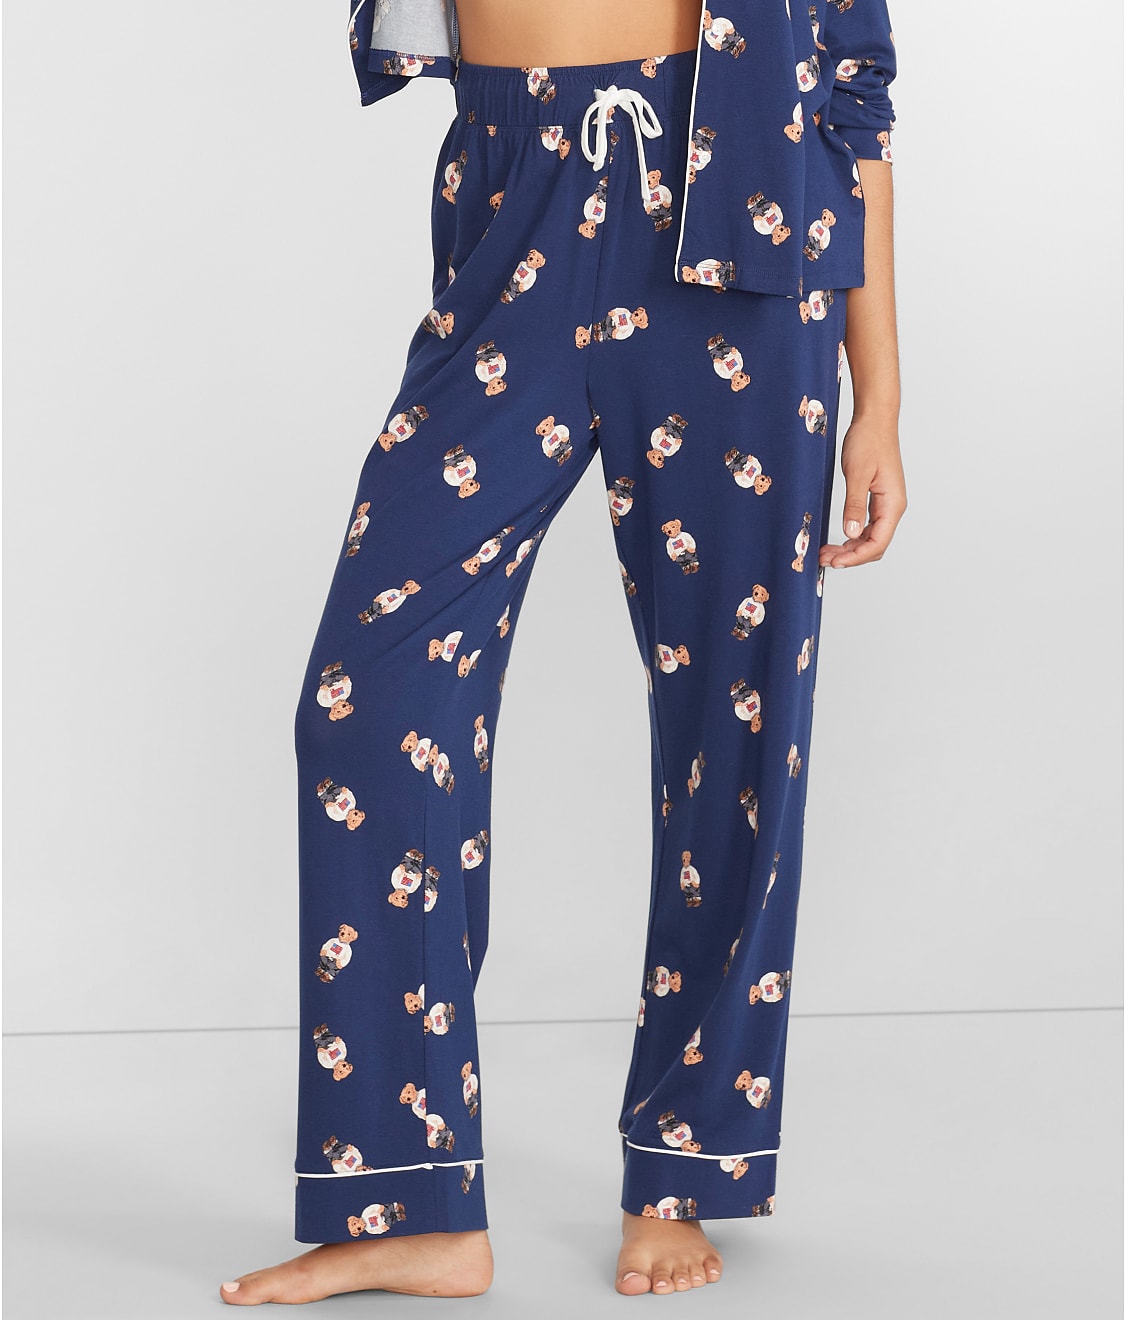 Polo Ralph Lauren: Navy Bear Knit Pajama Pants 4F0022